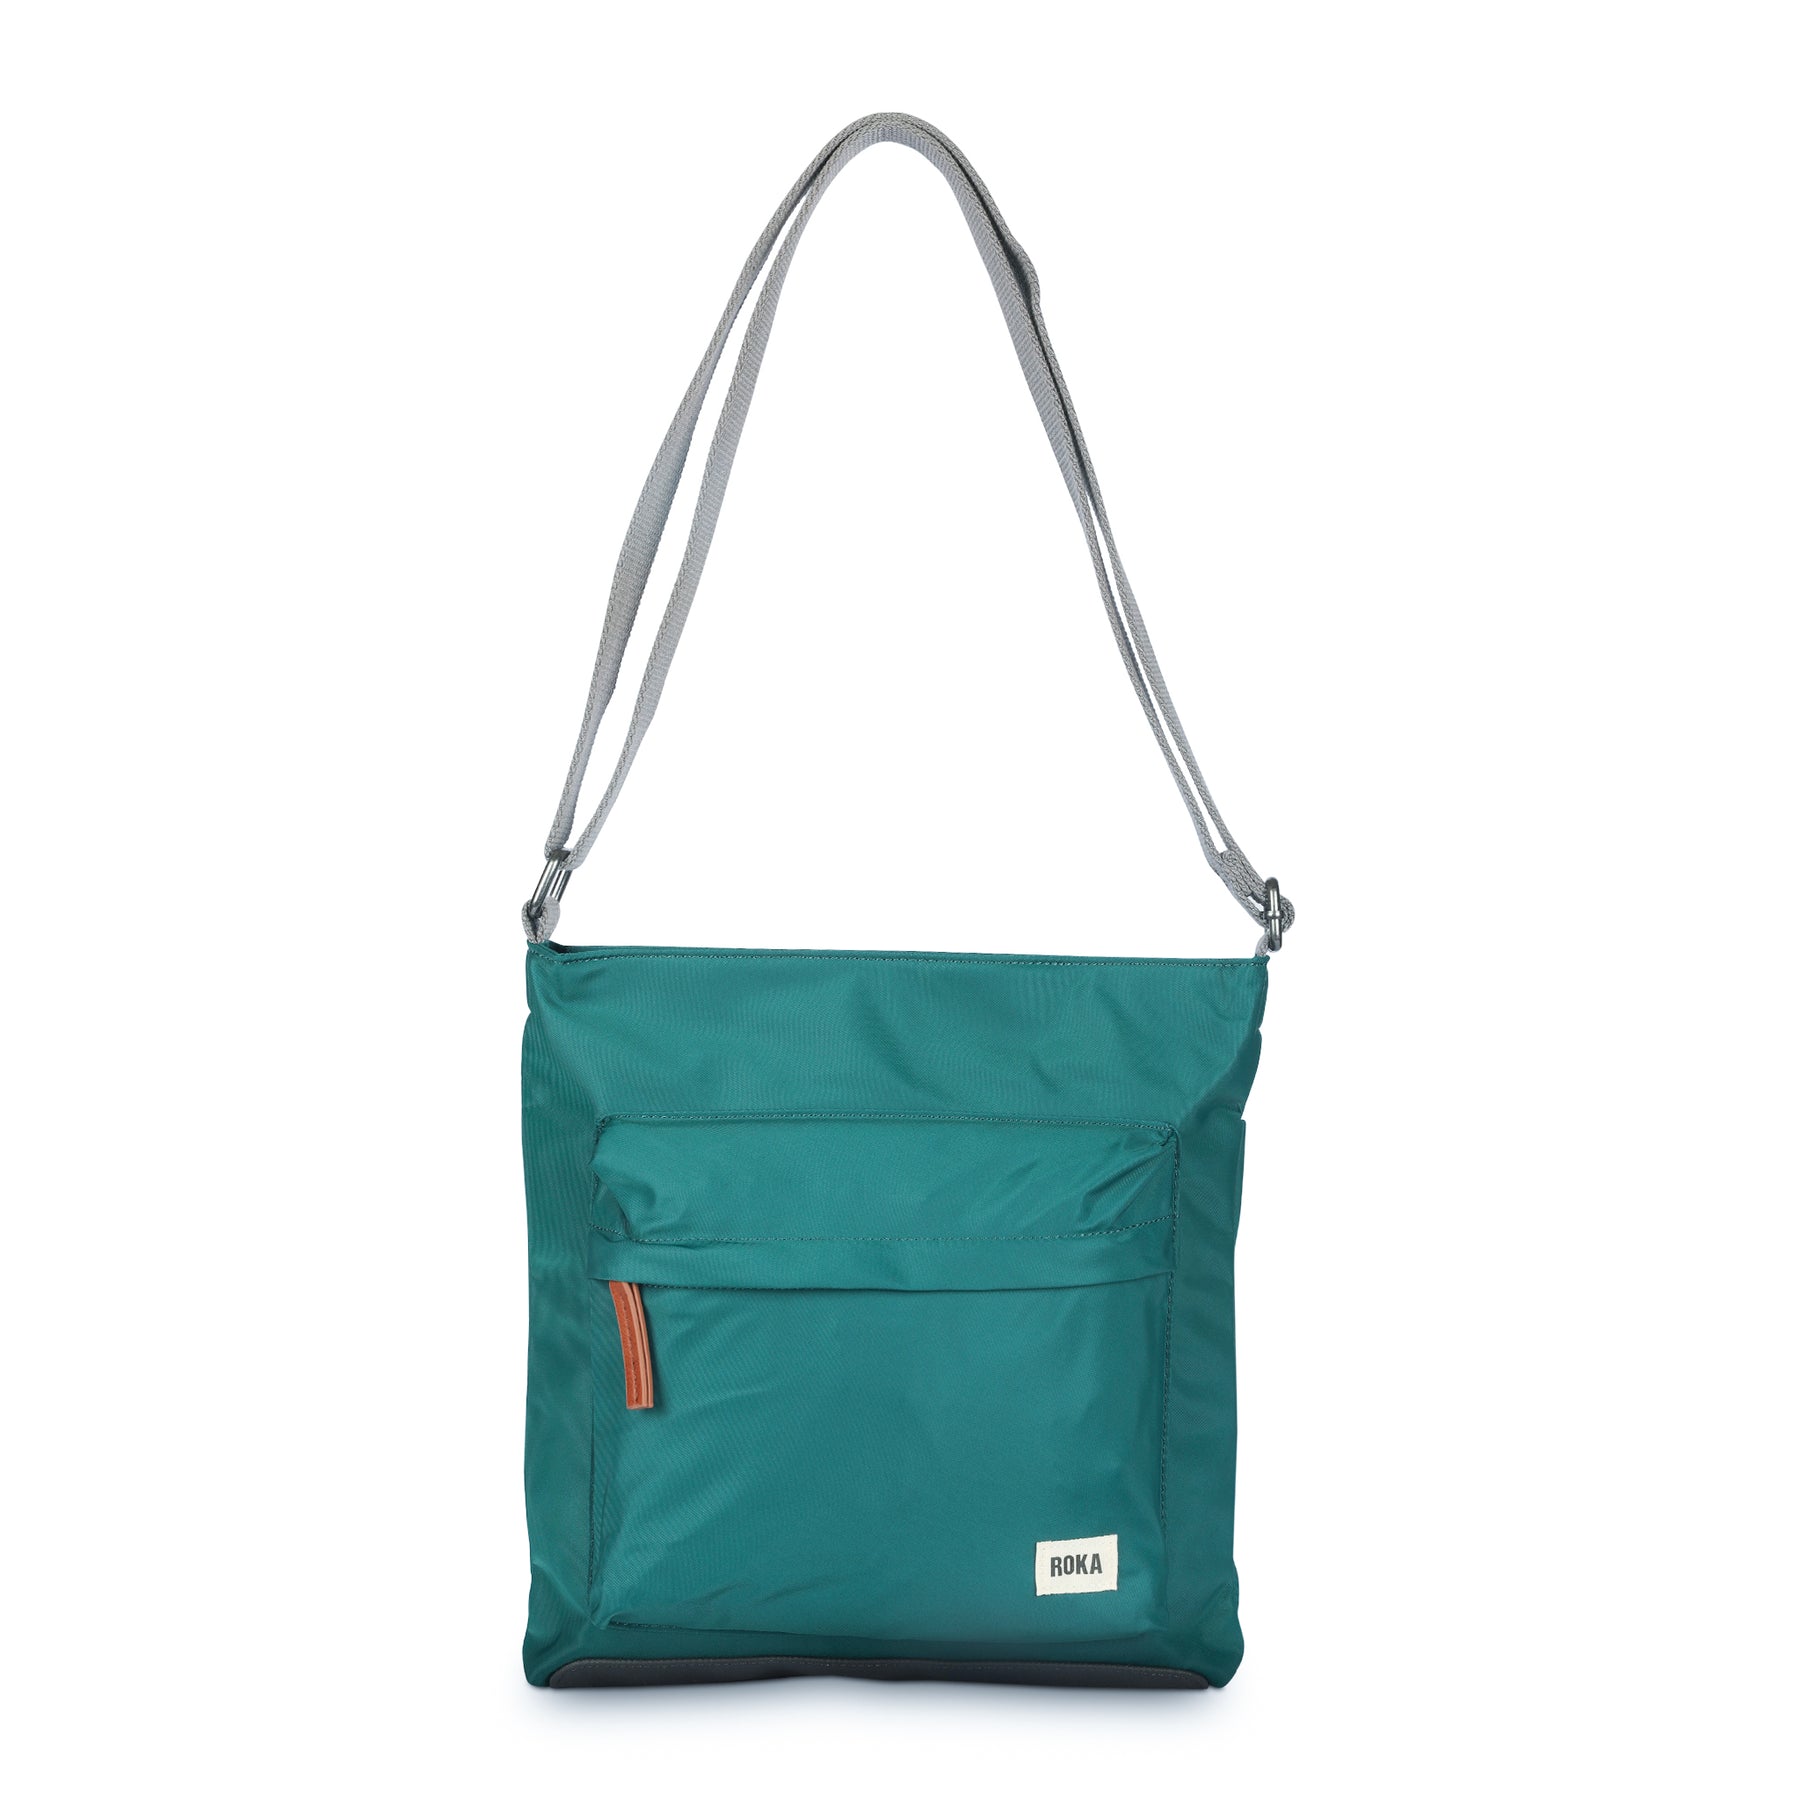 ROKA Kennington B Teal Medium Recycled Nylon Bag - OS